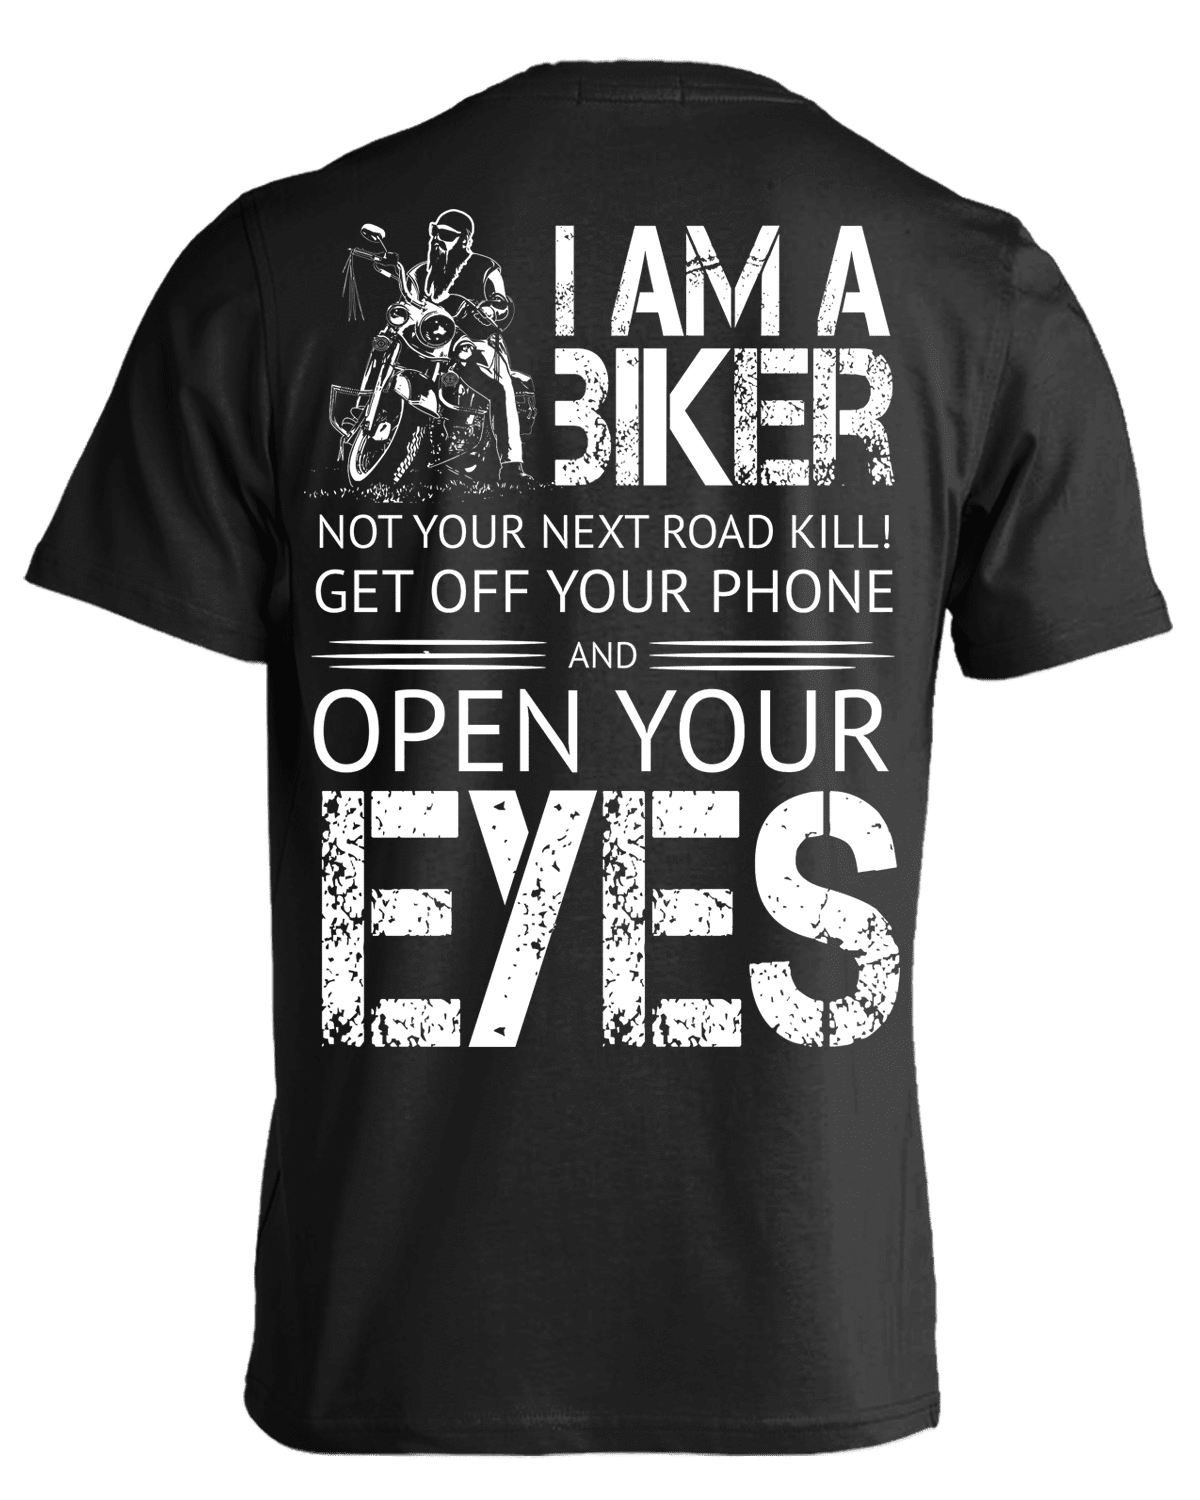 Men's Biker T-Shirts for Inspired Shirts at Bikers' Den